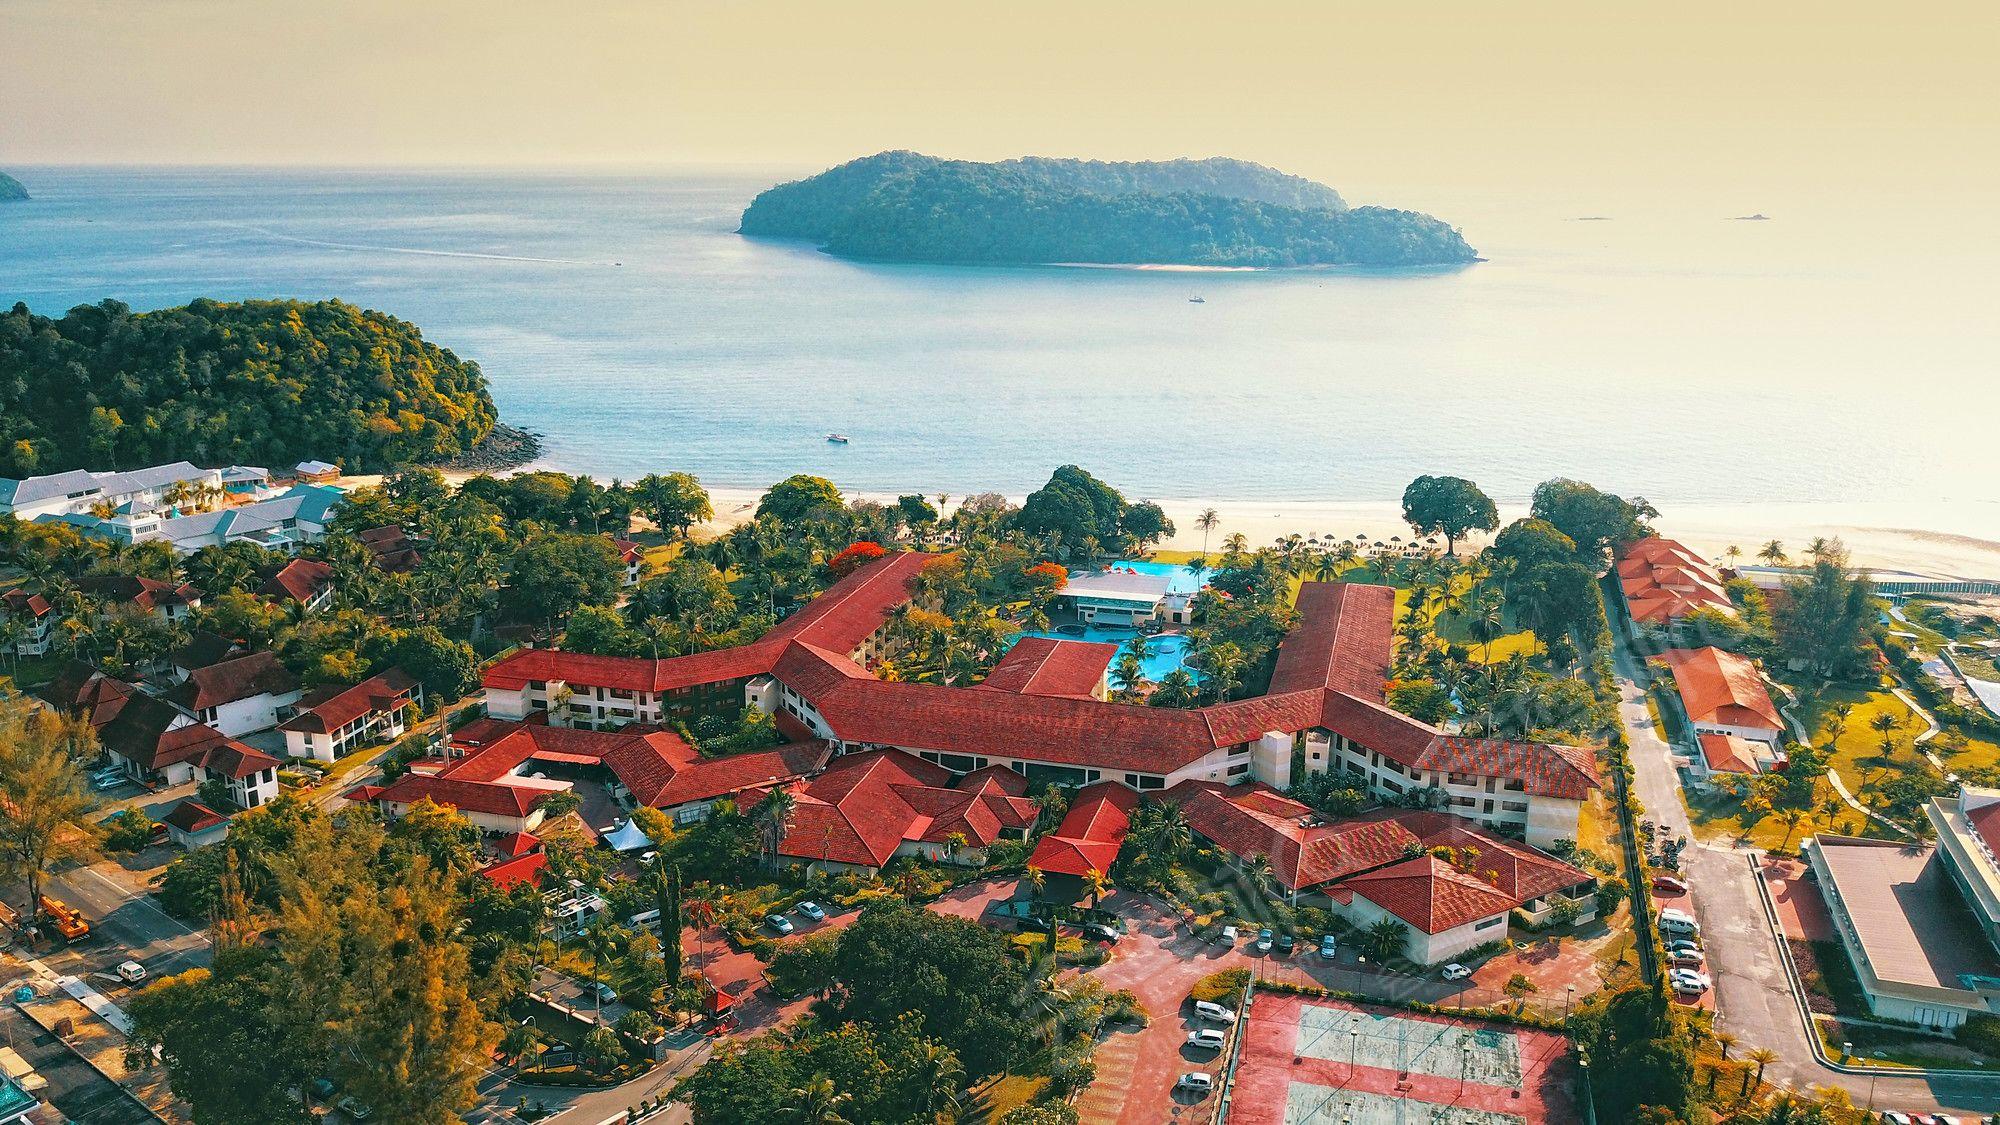 兰卡威假日海滩别墅度假村及水疗中心(Holiday Villa Beach Resort & Spa Langkawi)